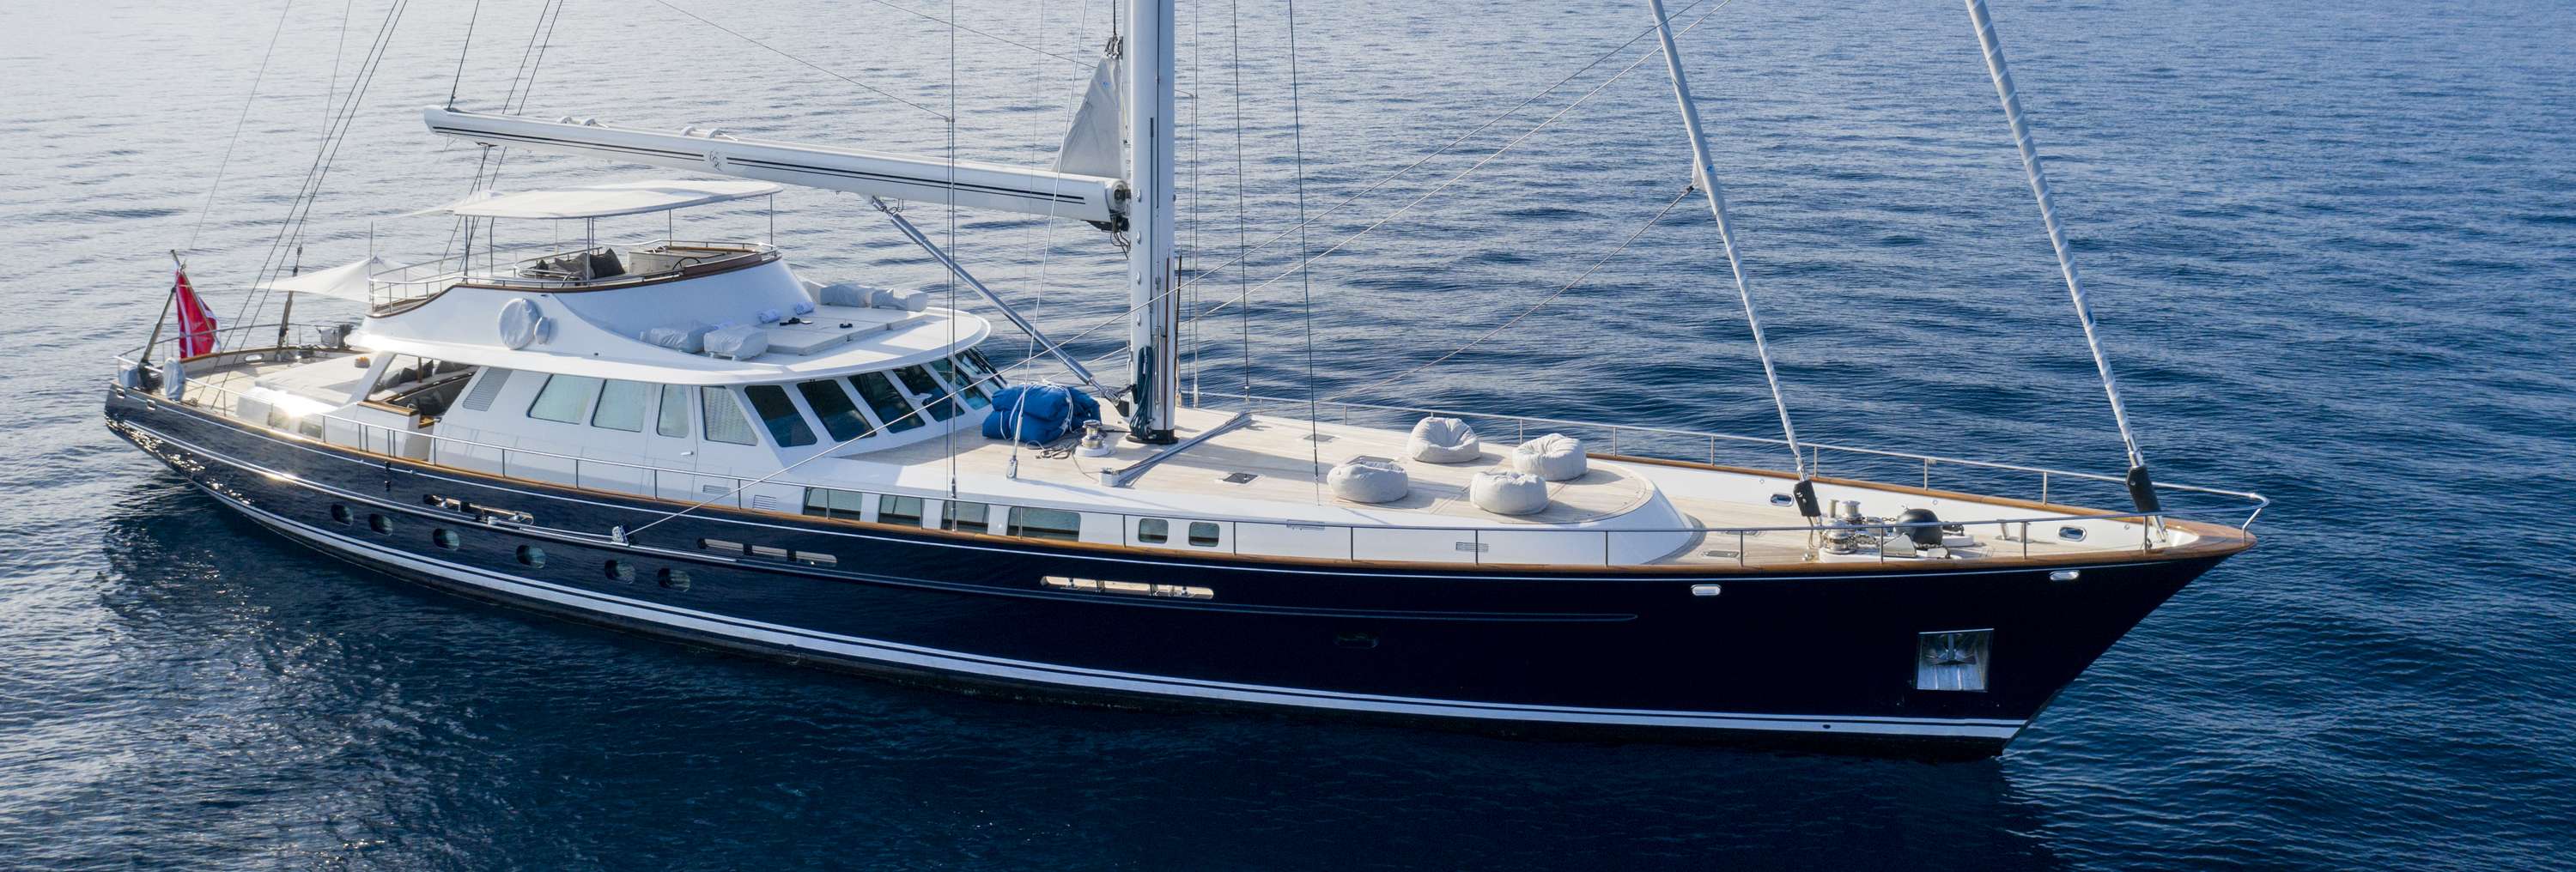 CORTO MALTESE ; Nouveau bateau à la vente